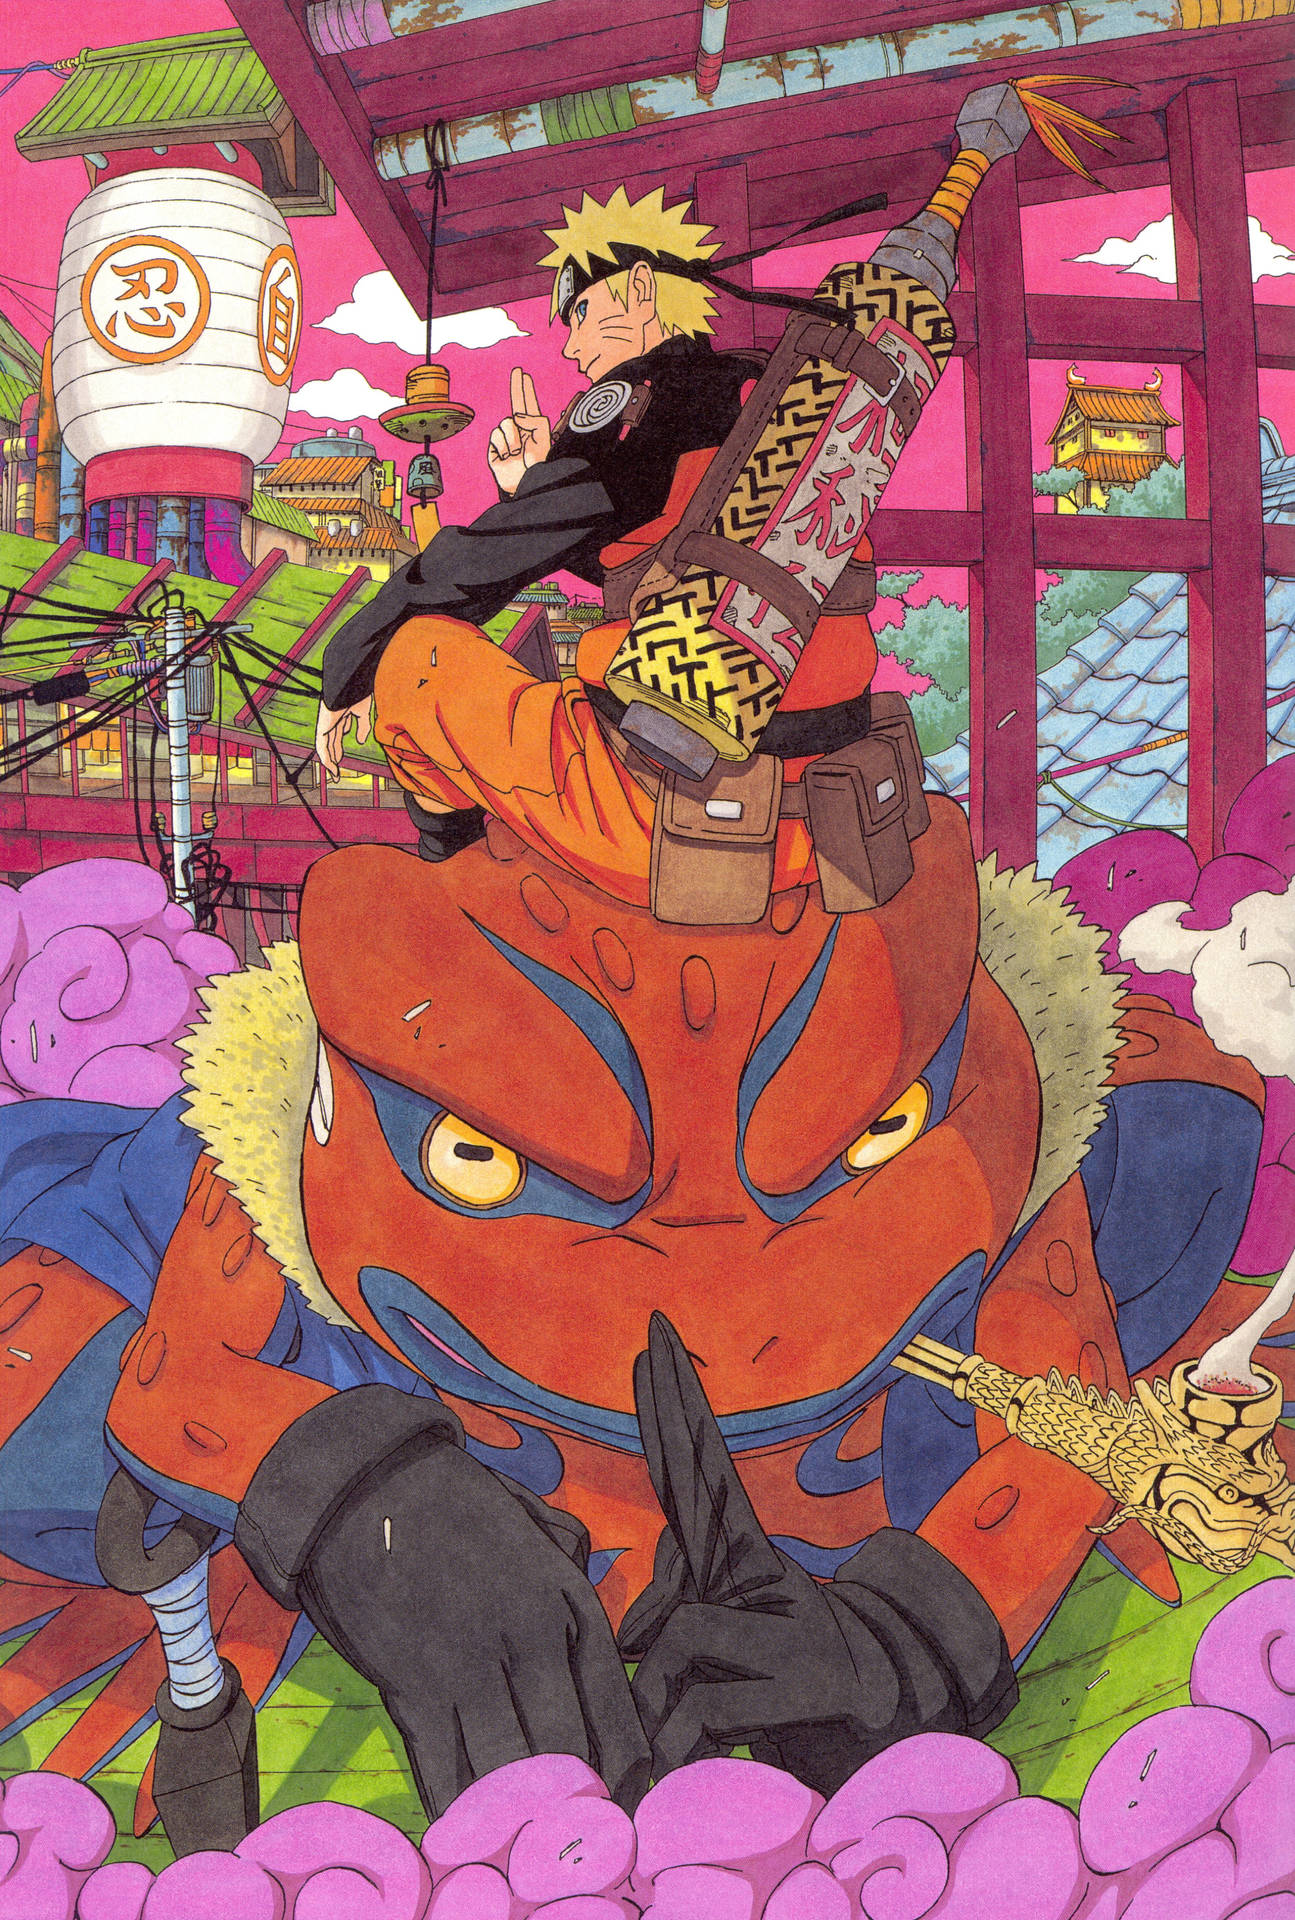 Moving Naruto Toad Gamamaru Background